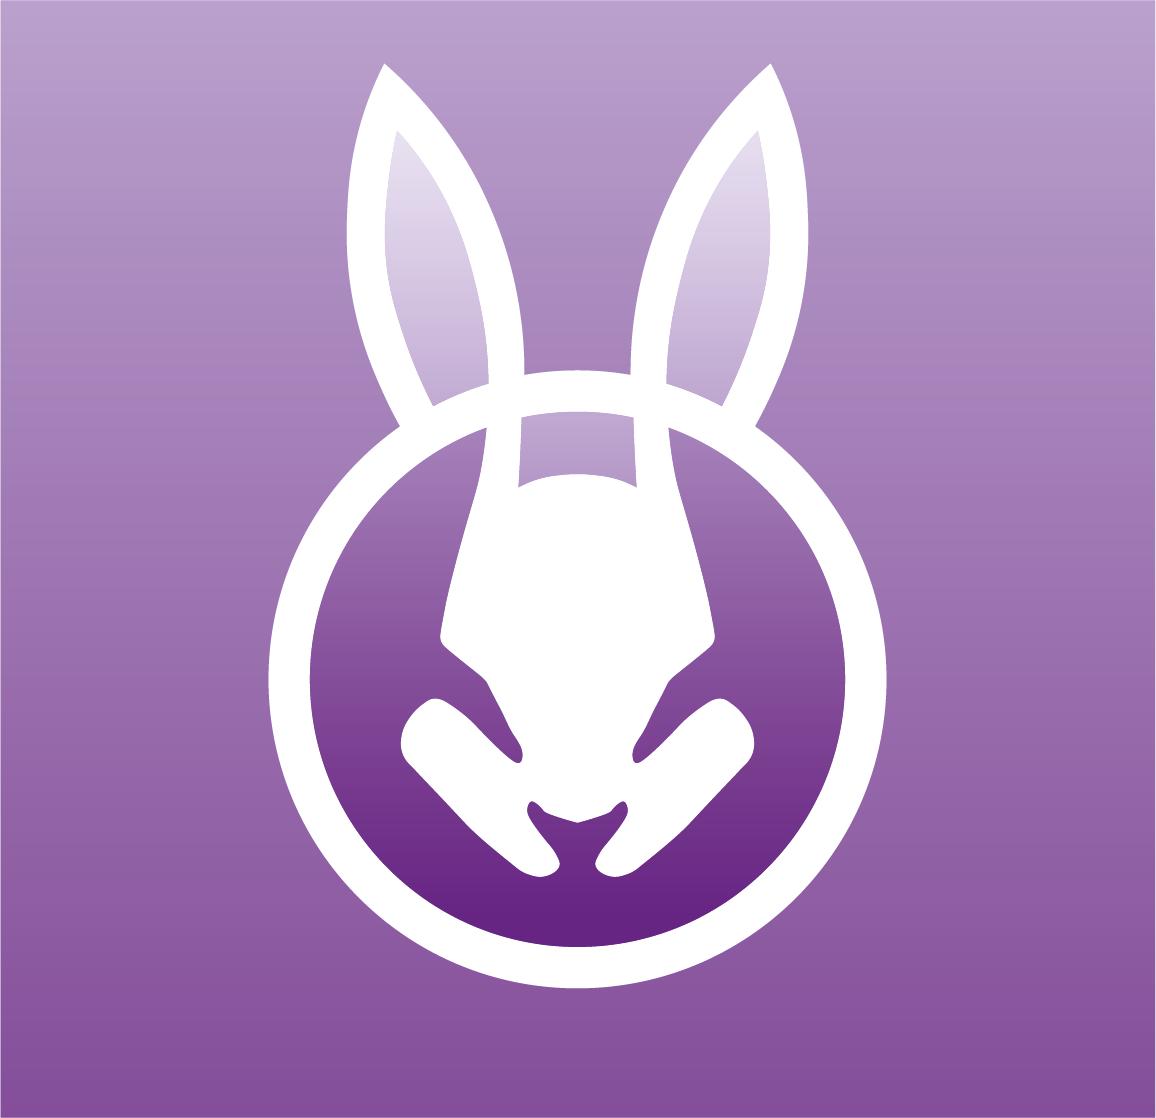 The Purple Rabbit